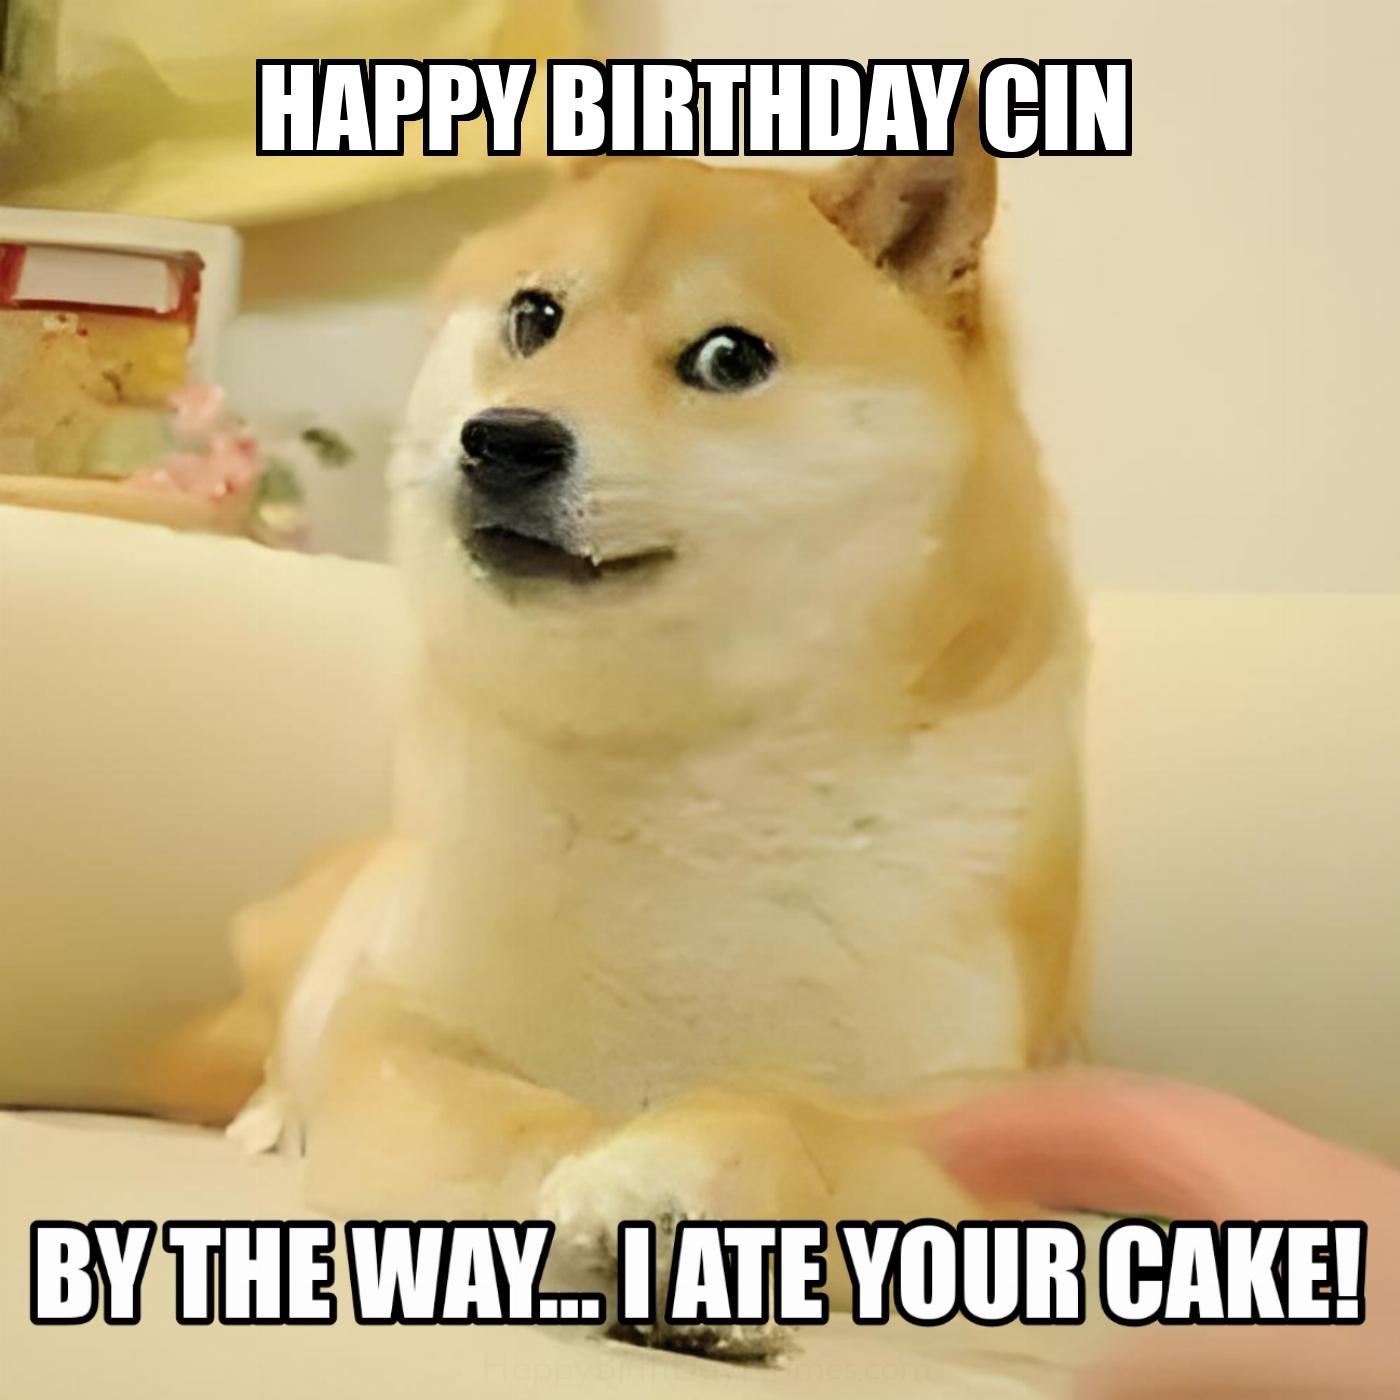 Happy Birthday Cin BTW I Ate Your Cake Meme